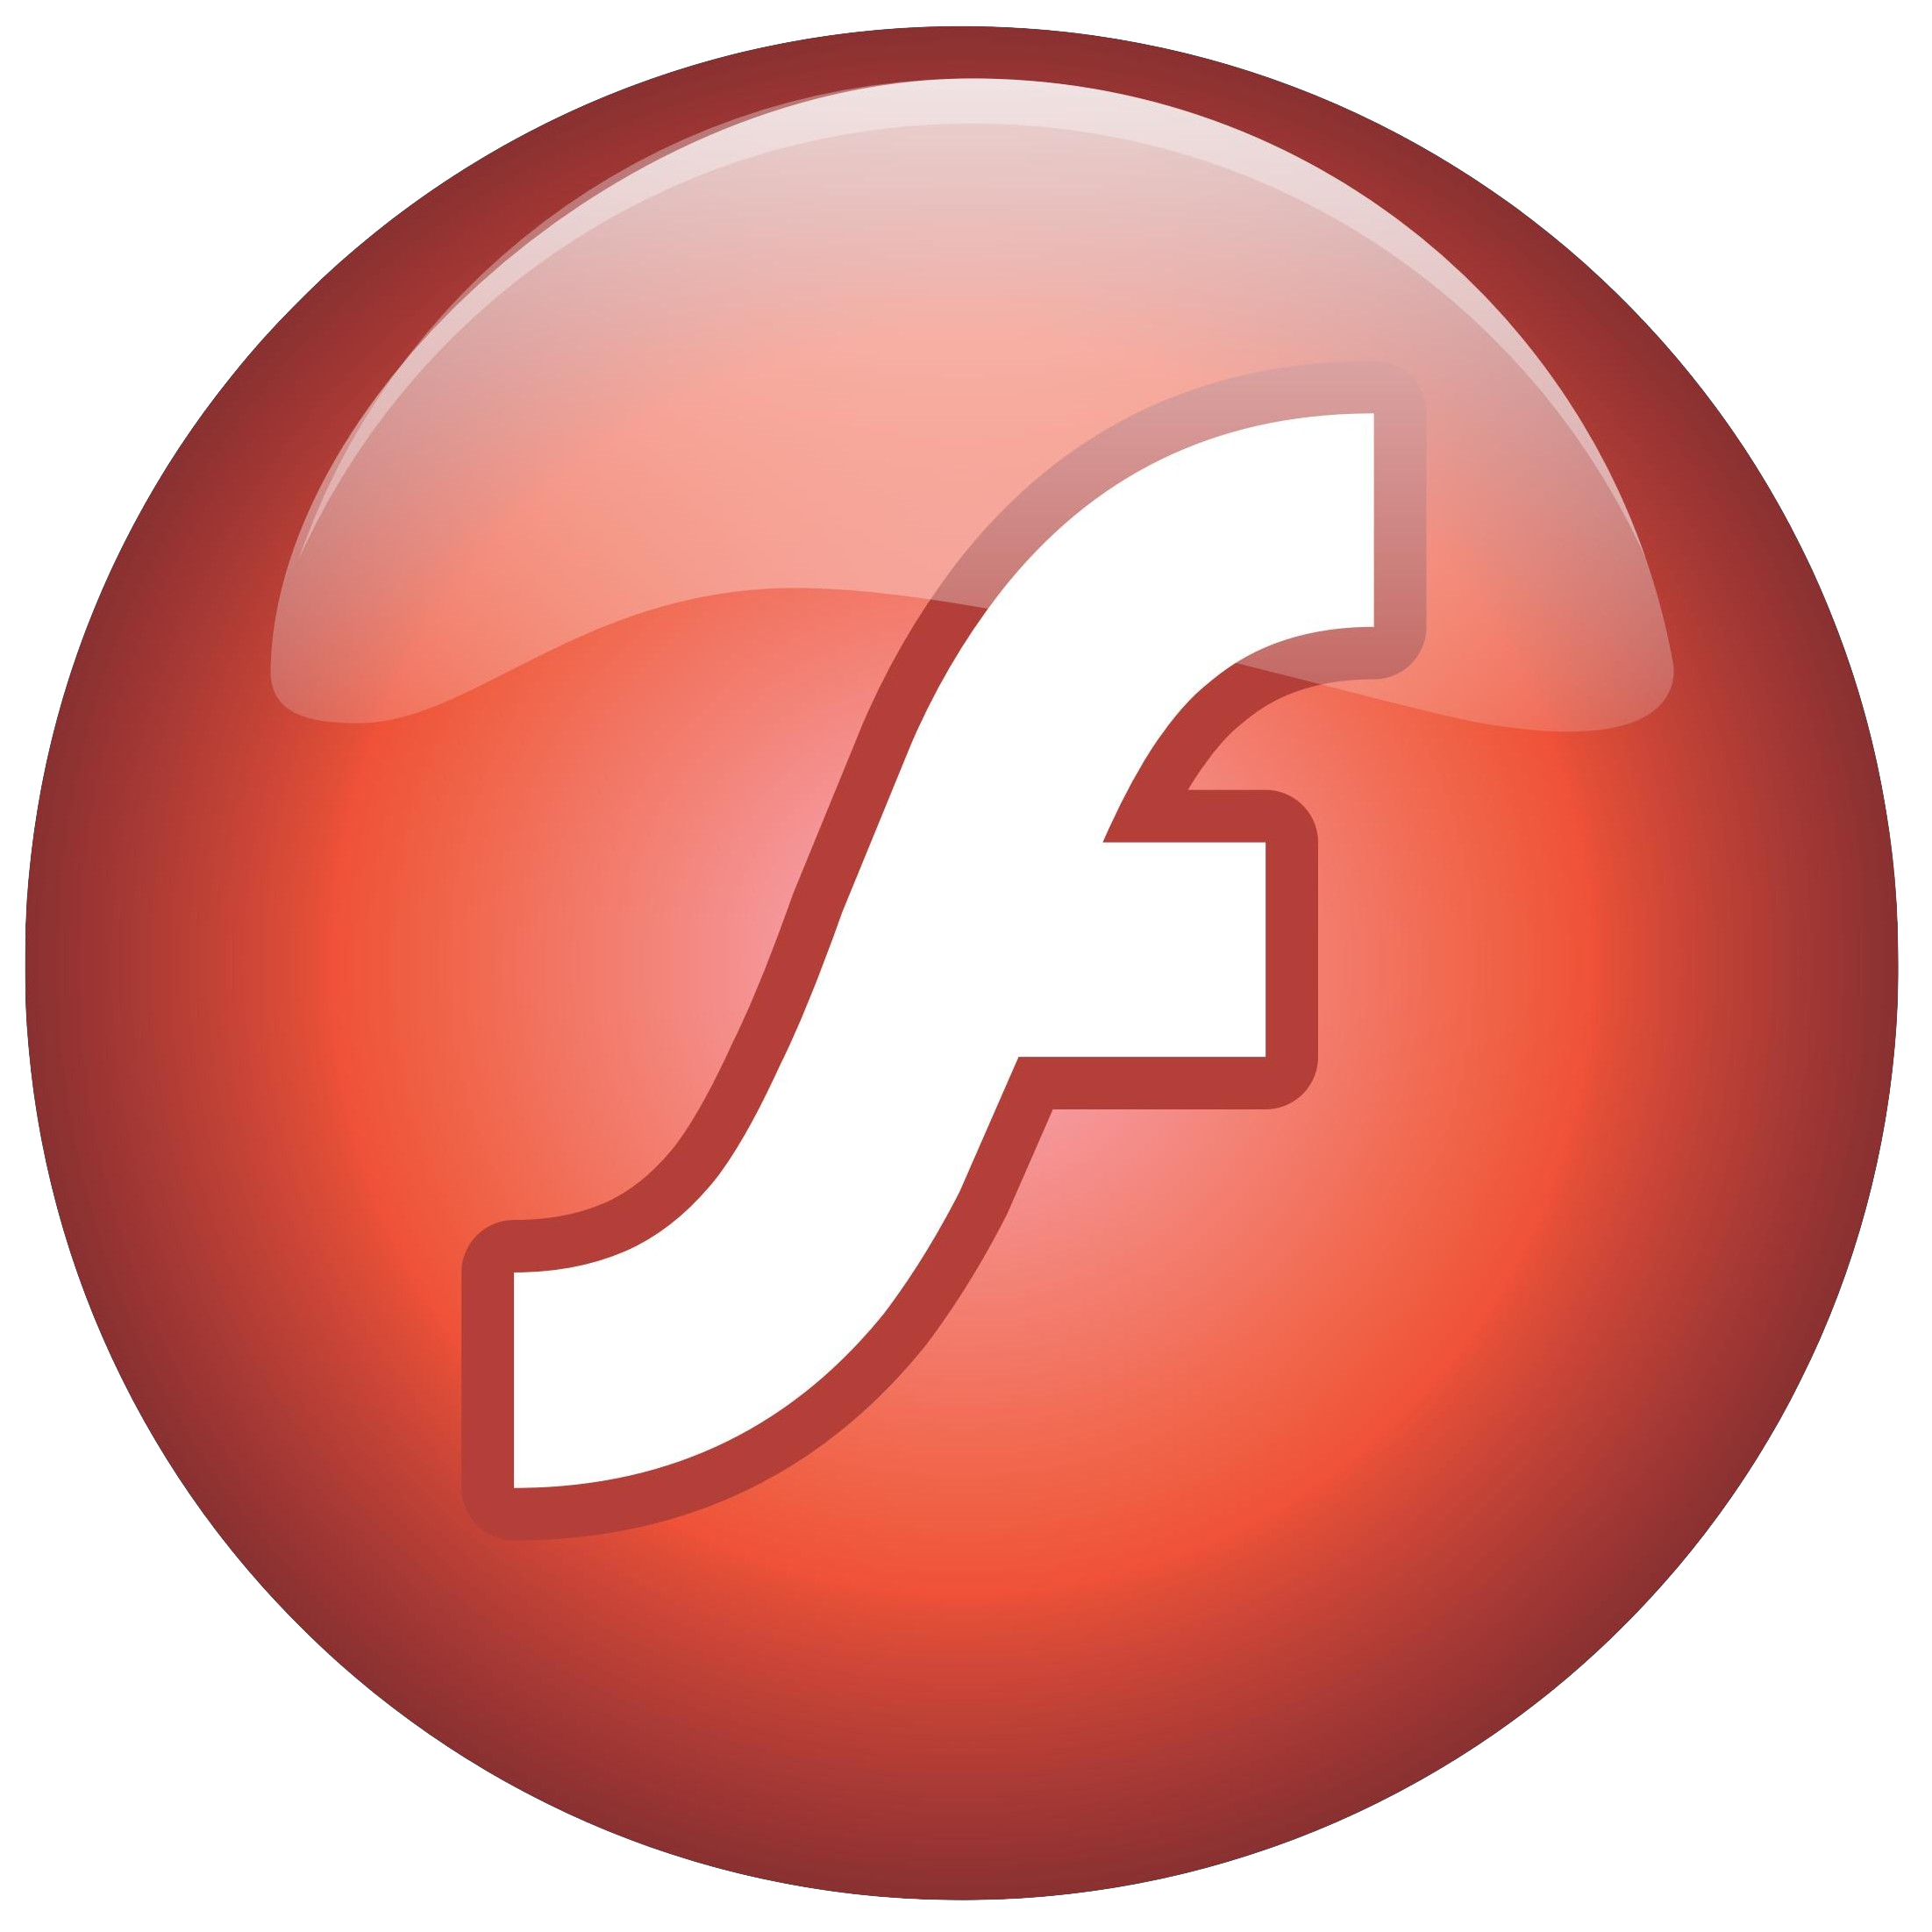 Older Version Of Adobe Flash